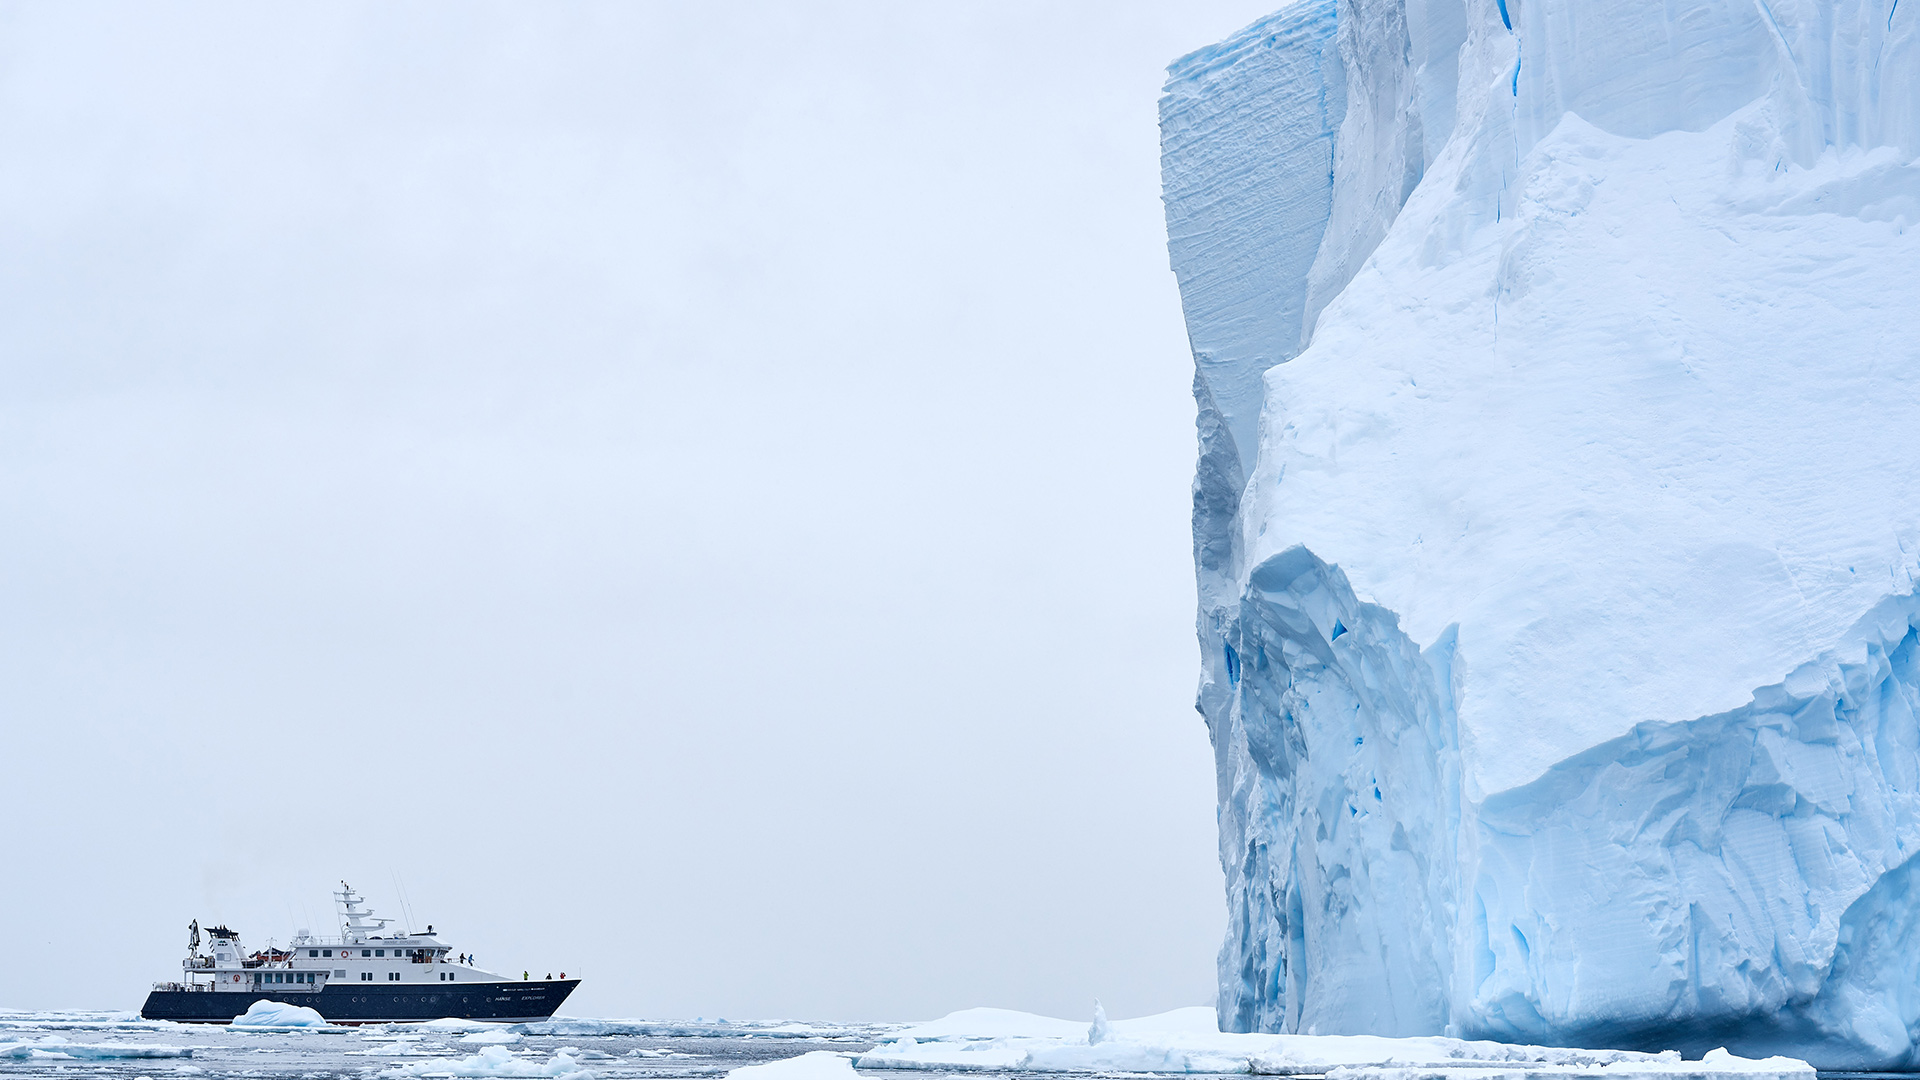 Yacht_HanseExplorer_©ReeveJolliffeEYOS©_location(Antarctica_Peninsula)____20170203_215004_240_[6016x4016]_2.5MB